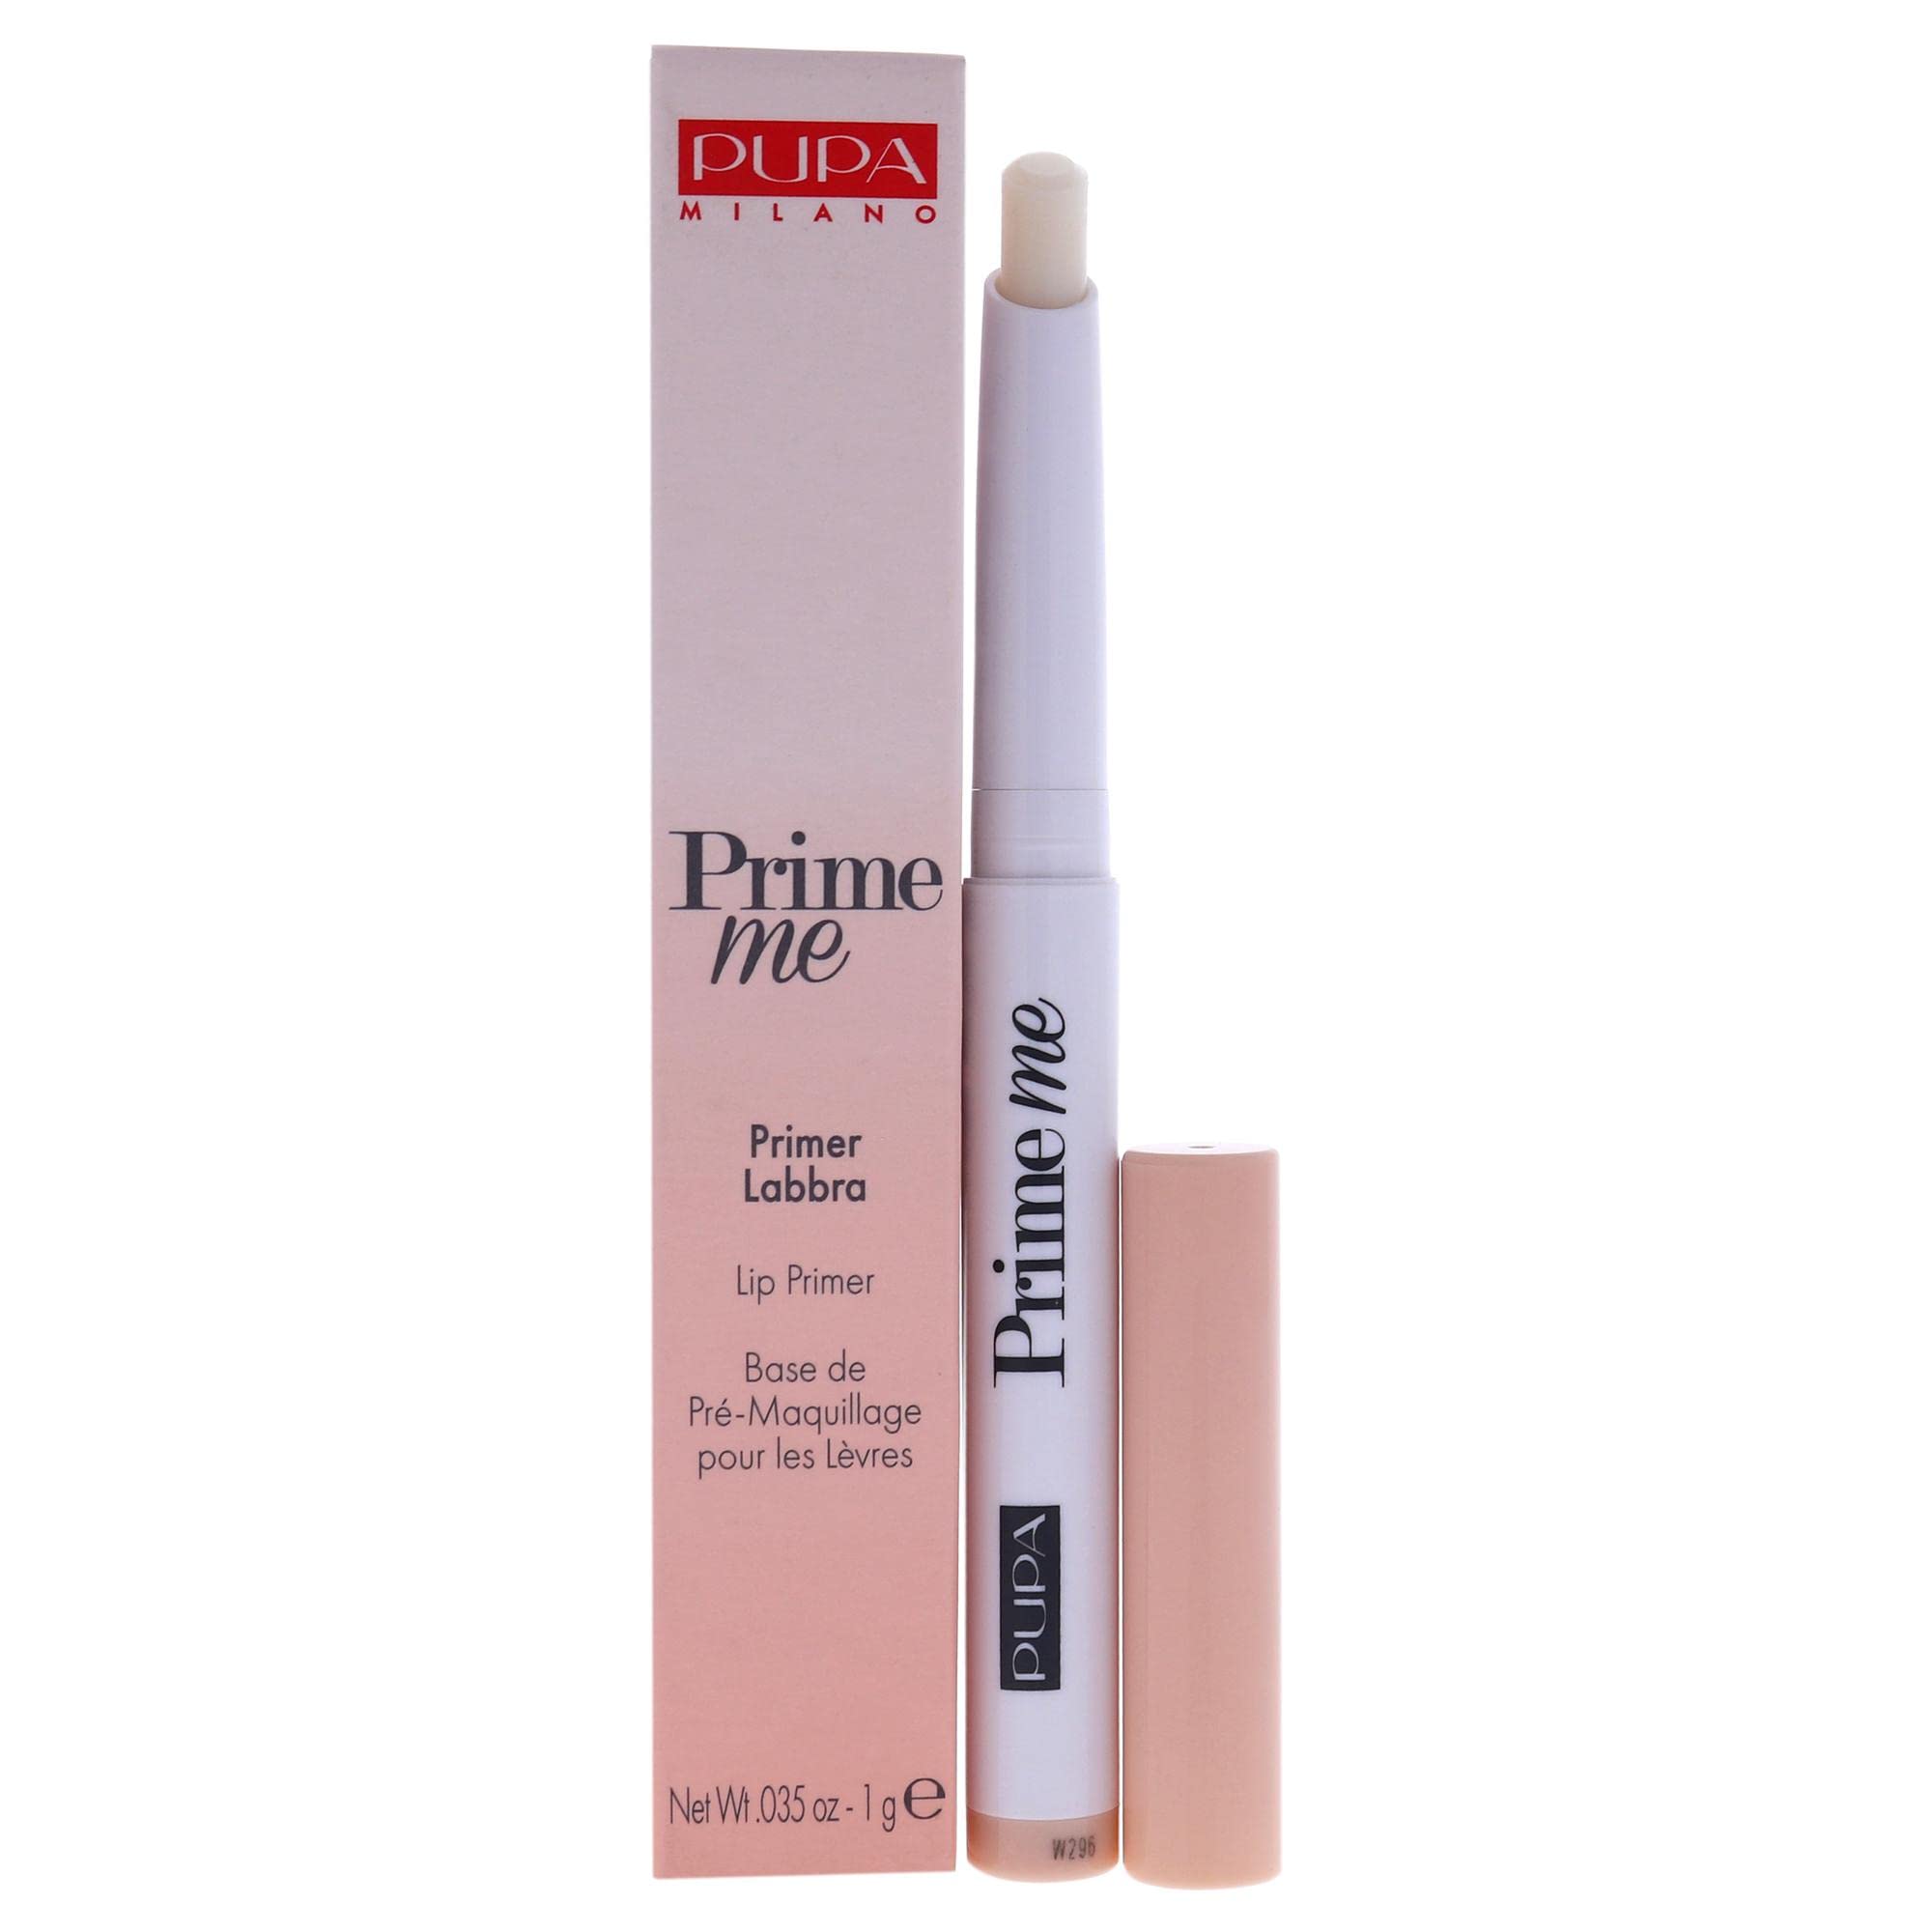 Pupa Milano Prime Me Lip Primer - 001 Transparent For Women 1.0g Primer